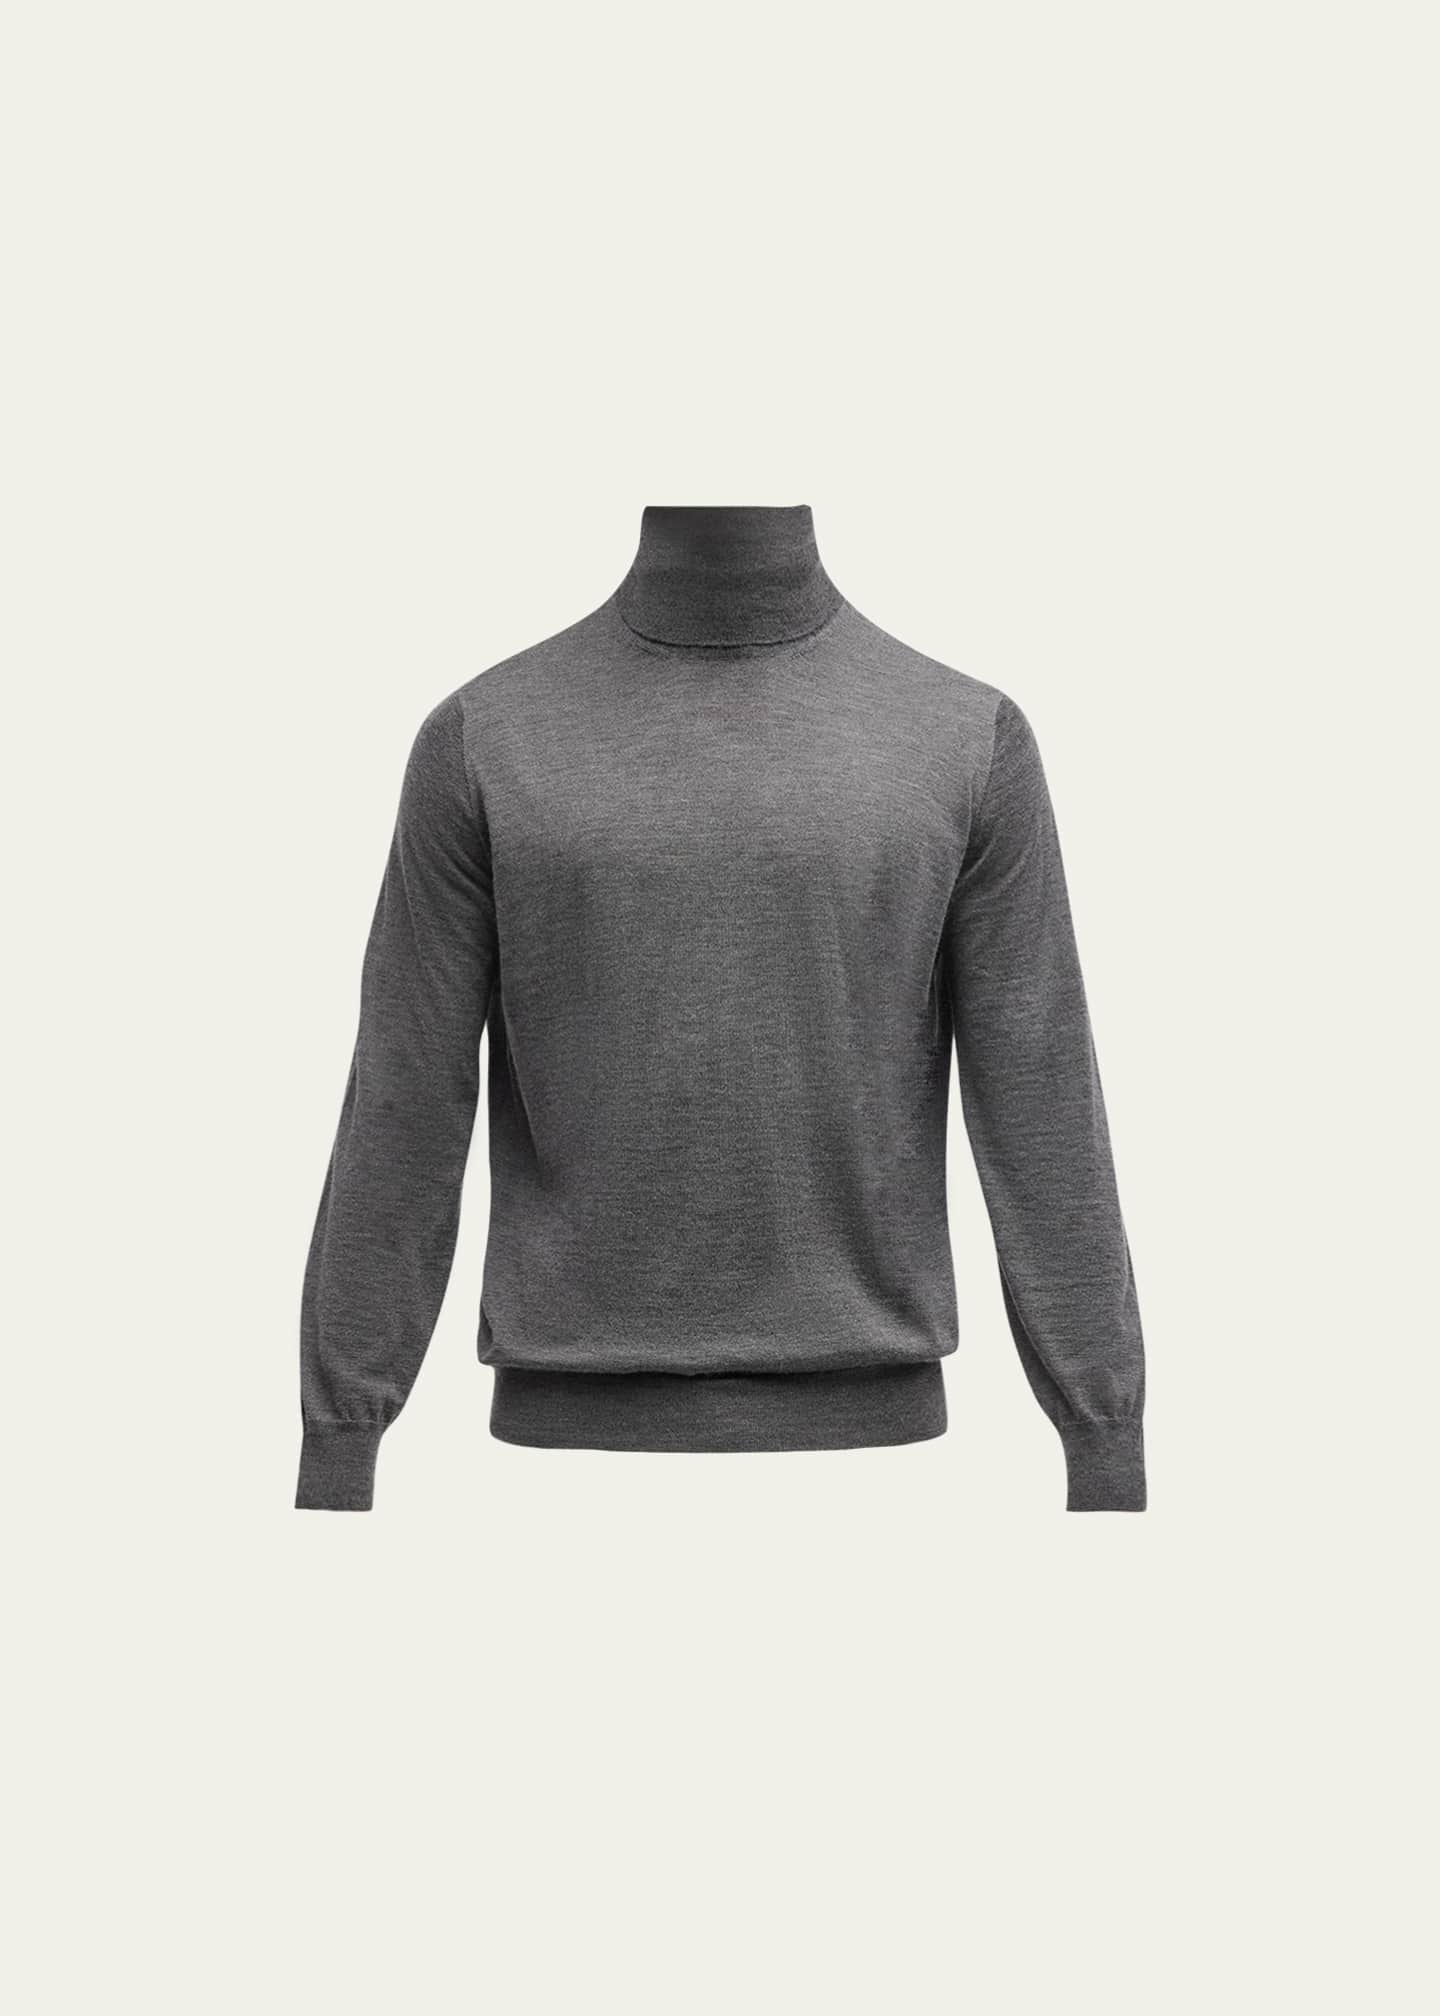 Brunello Cucinelli Cashmere-Silk Sweater